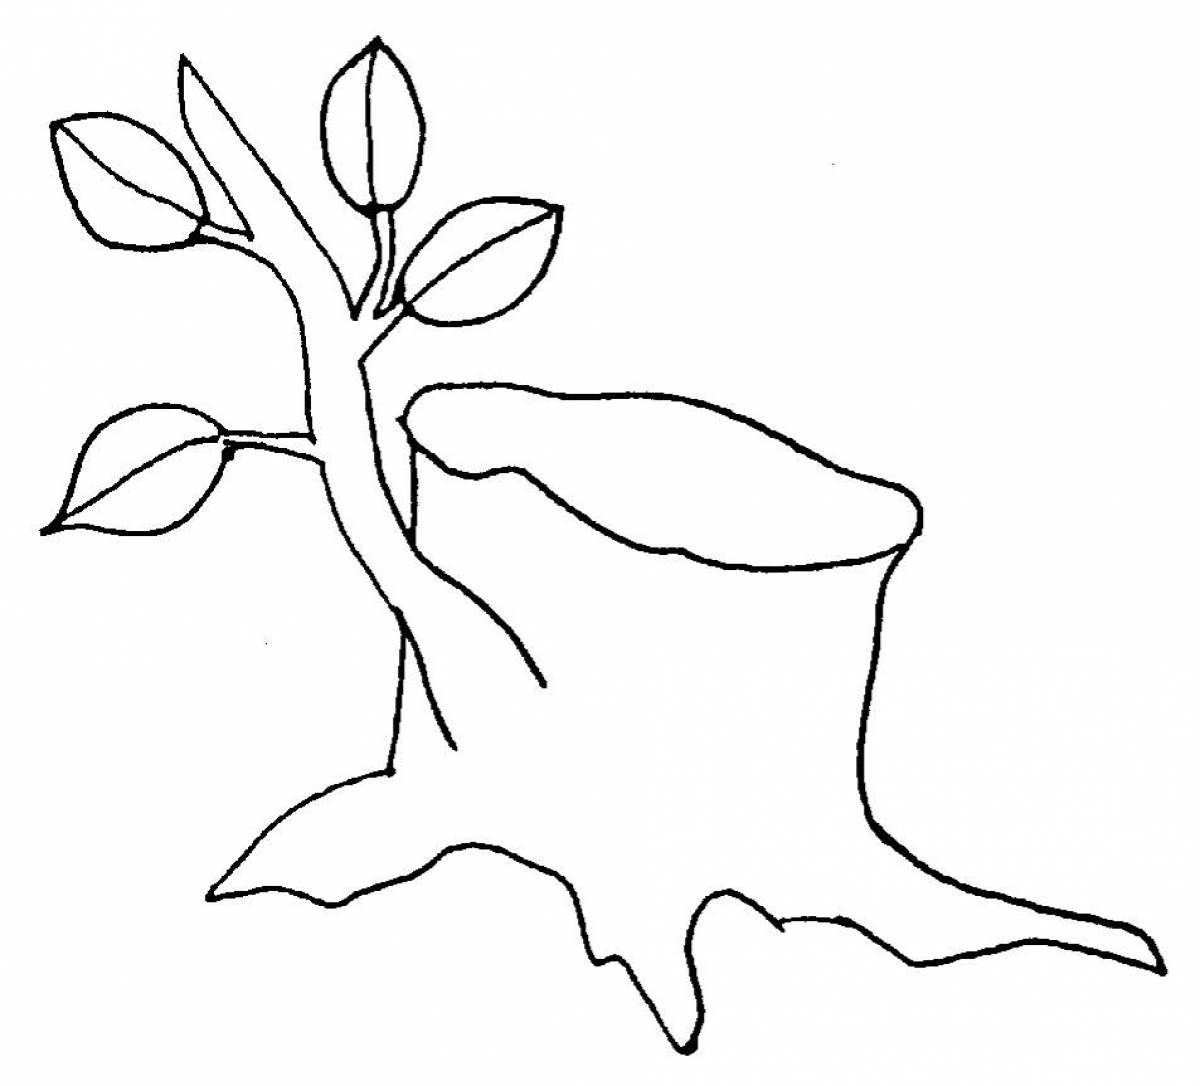 Stump drawing